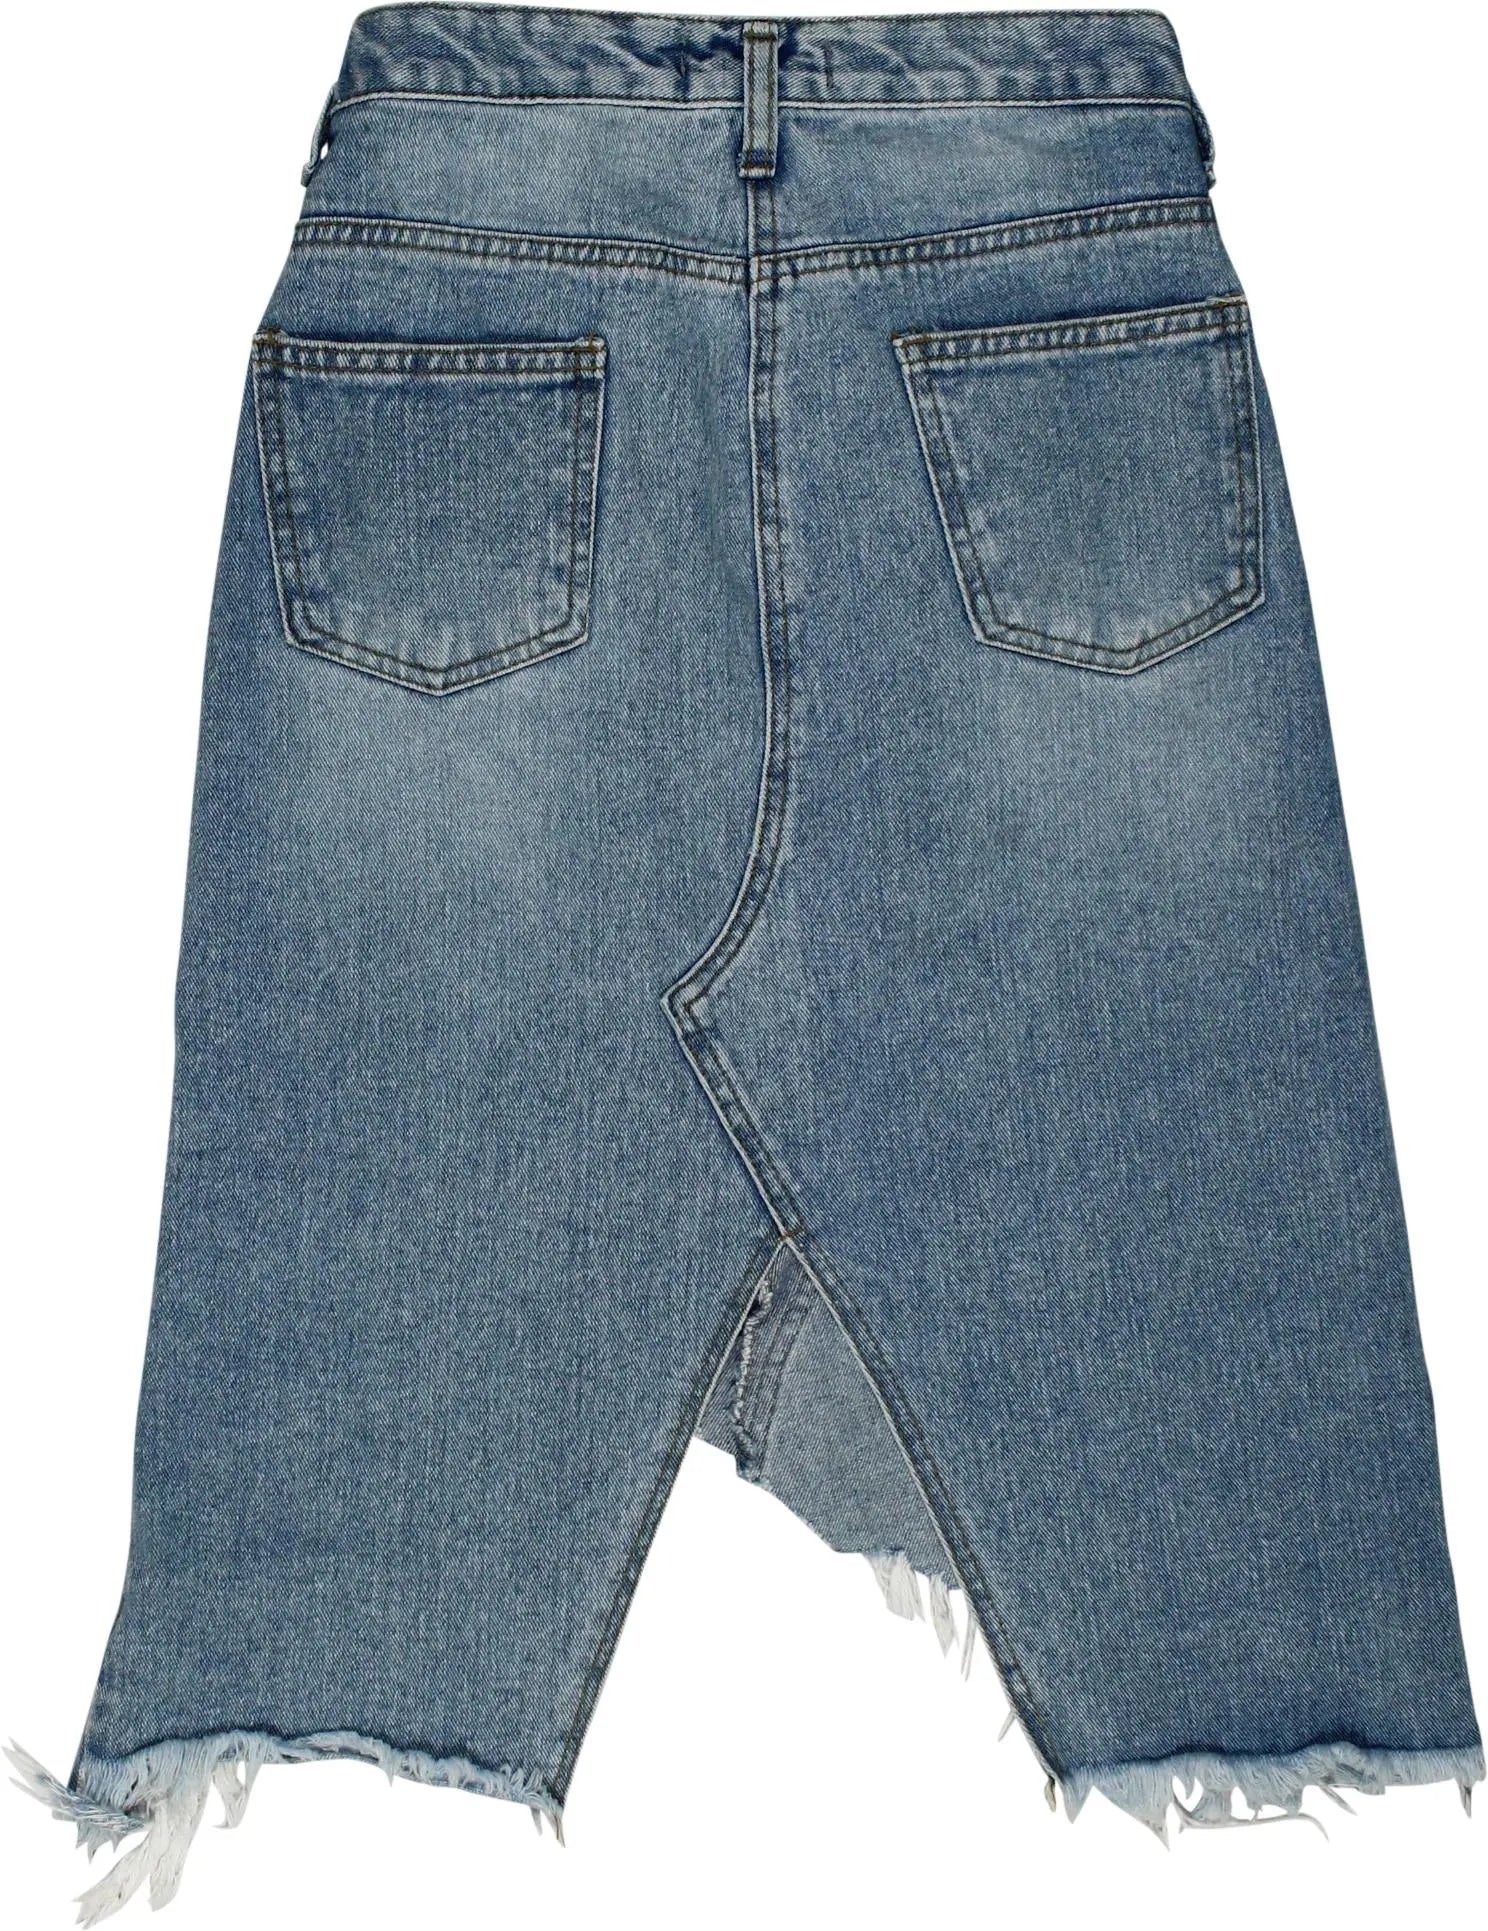 Primavera - Denim Skirt- ThriftTale.com - Vintage and second handclothing